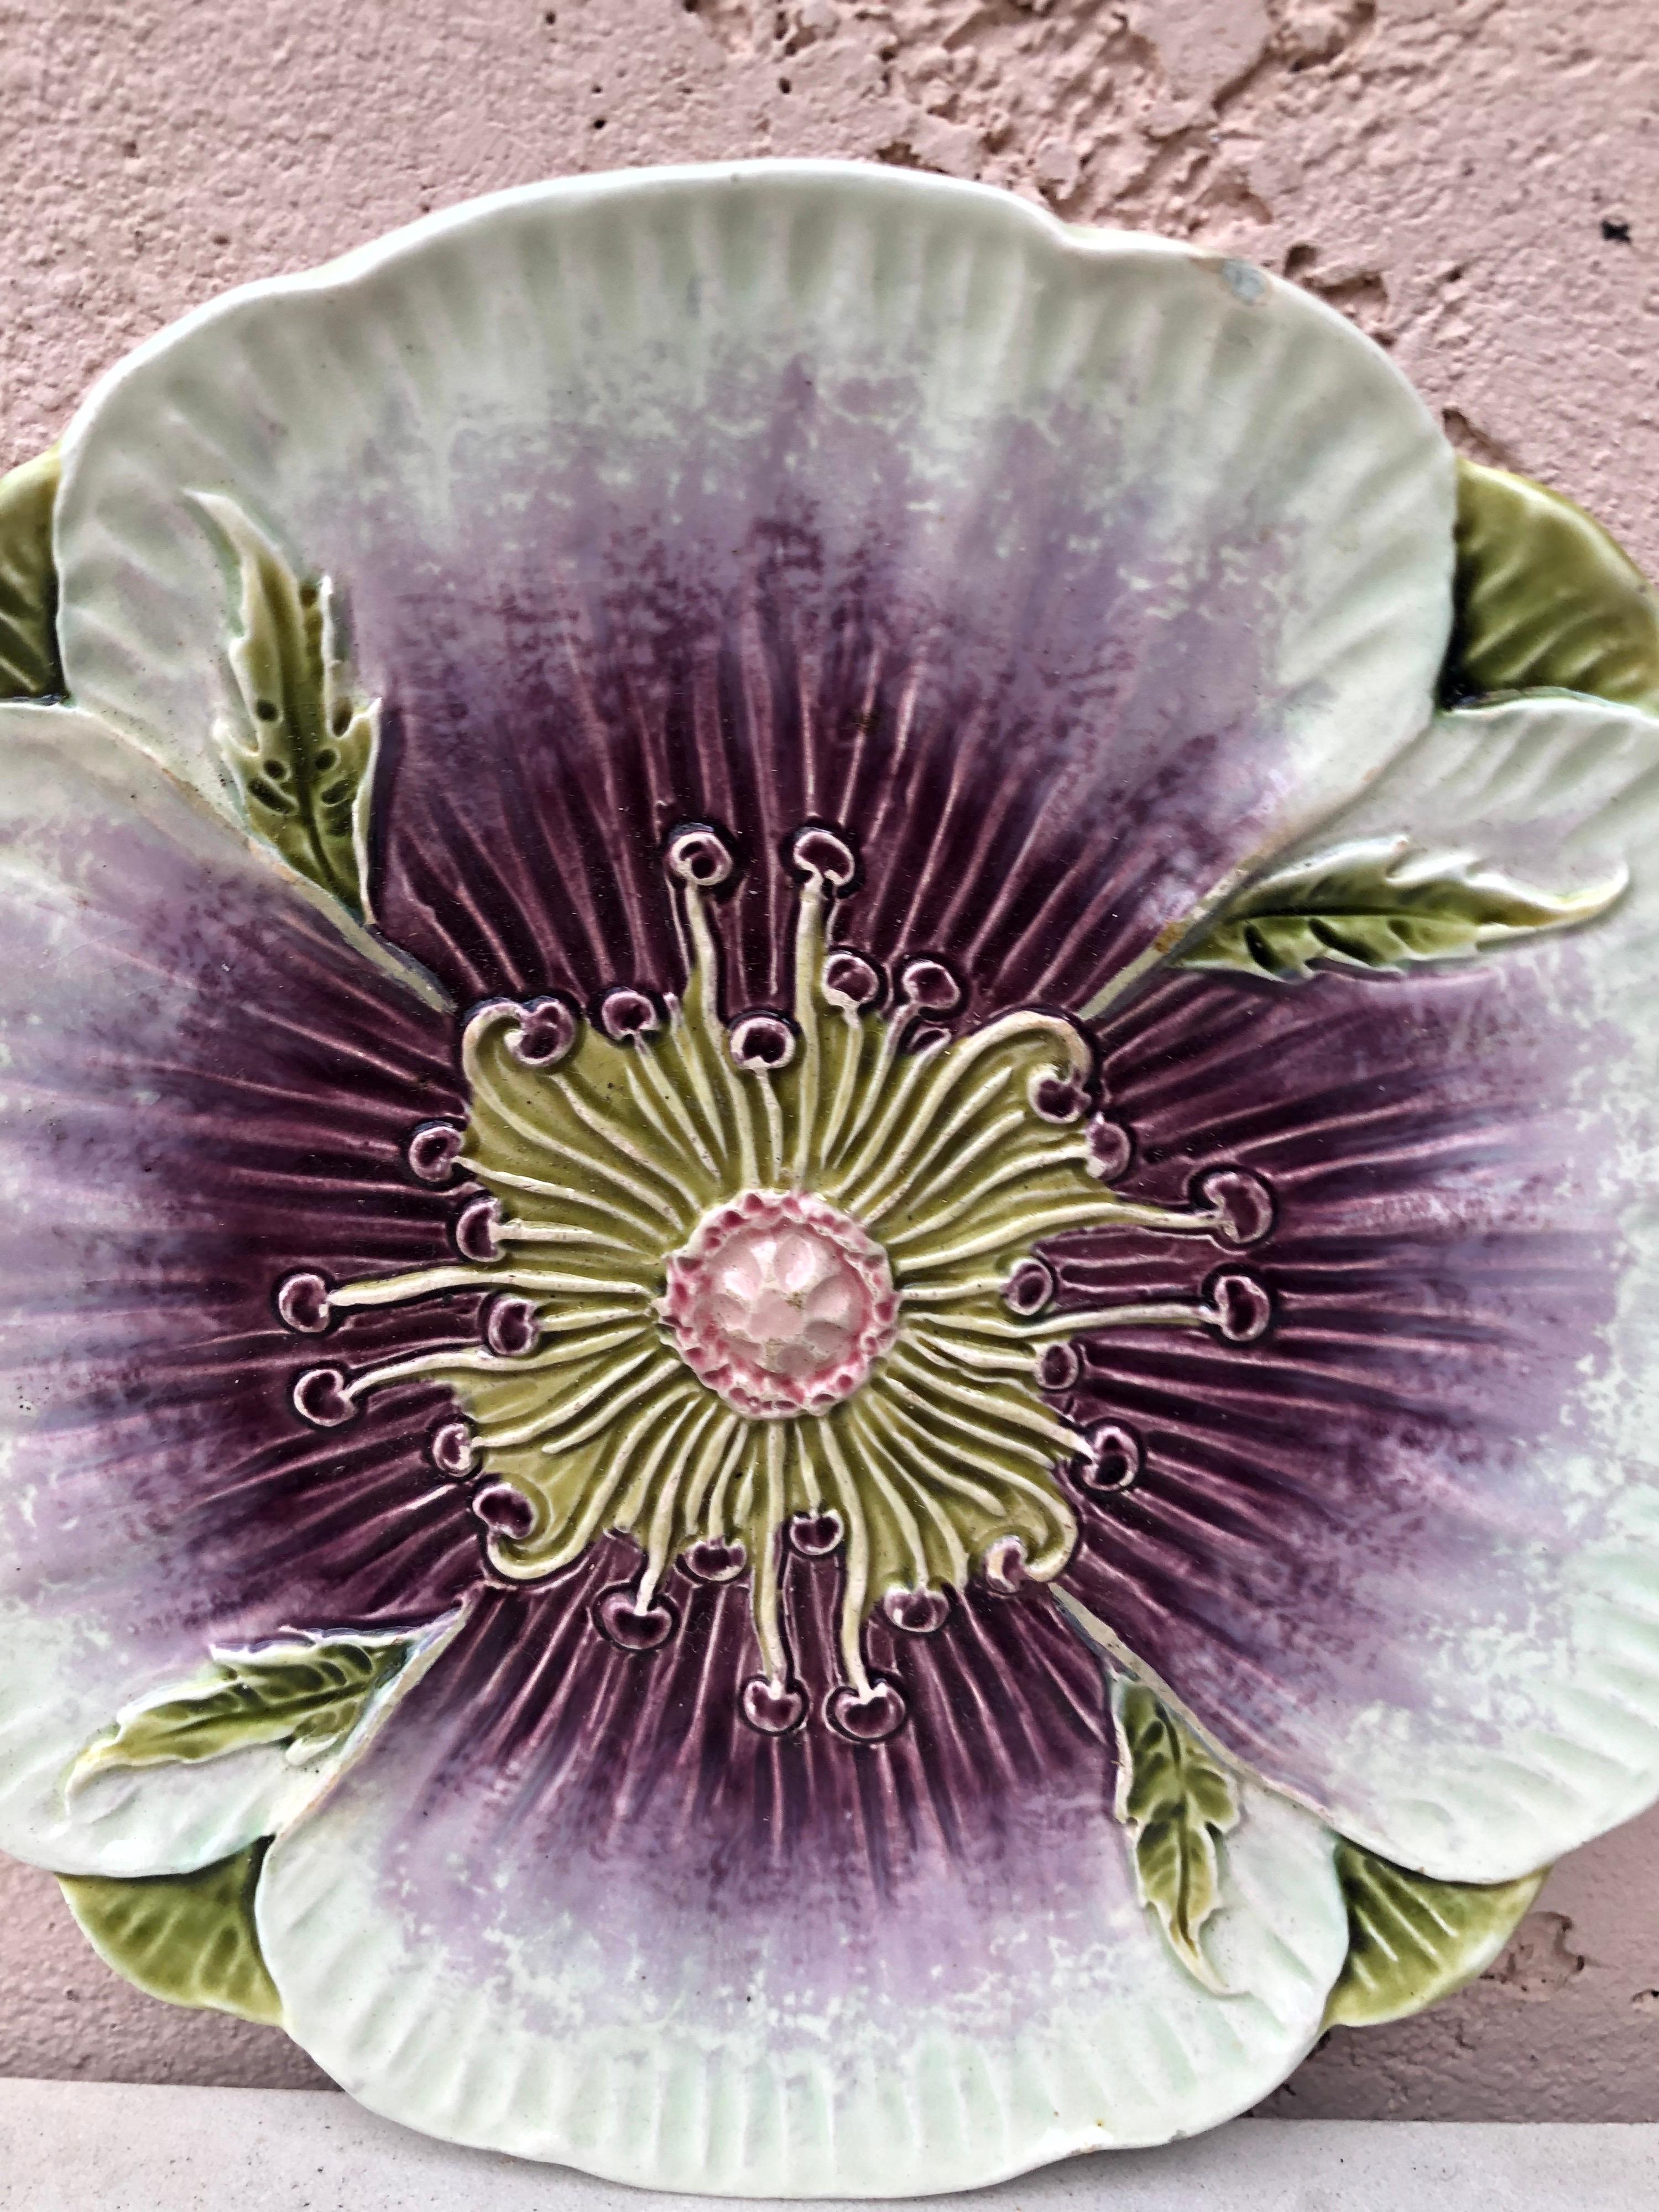 Small Austrian Majolica Flower Plate Circa 1900.
Attributed to Julius Dressler.